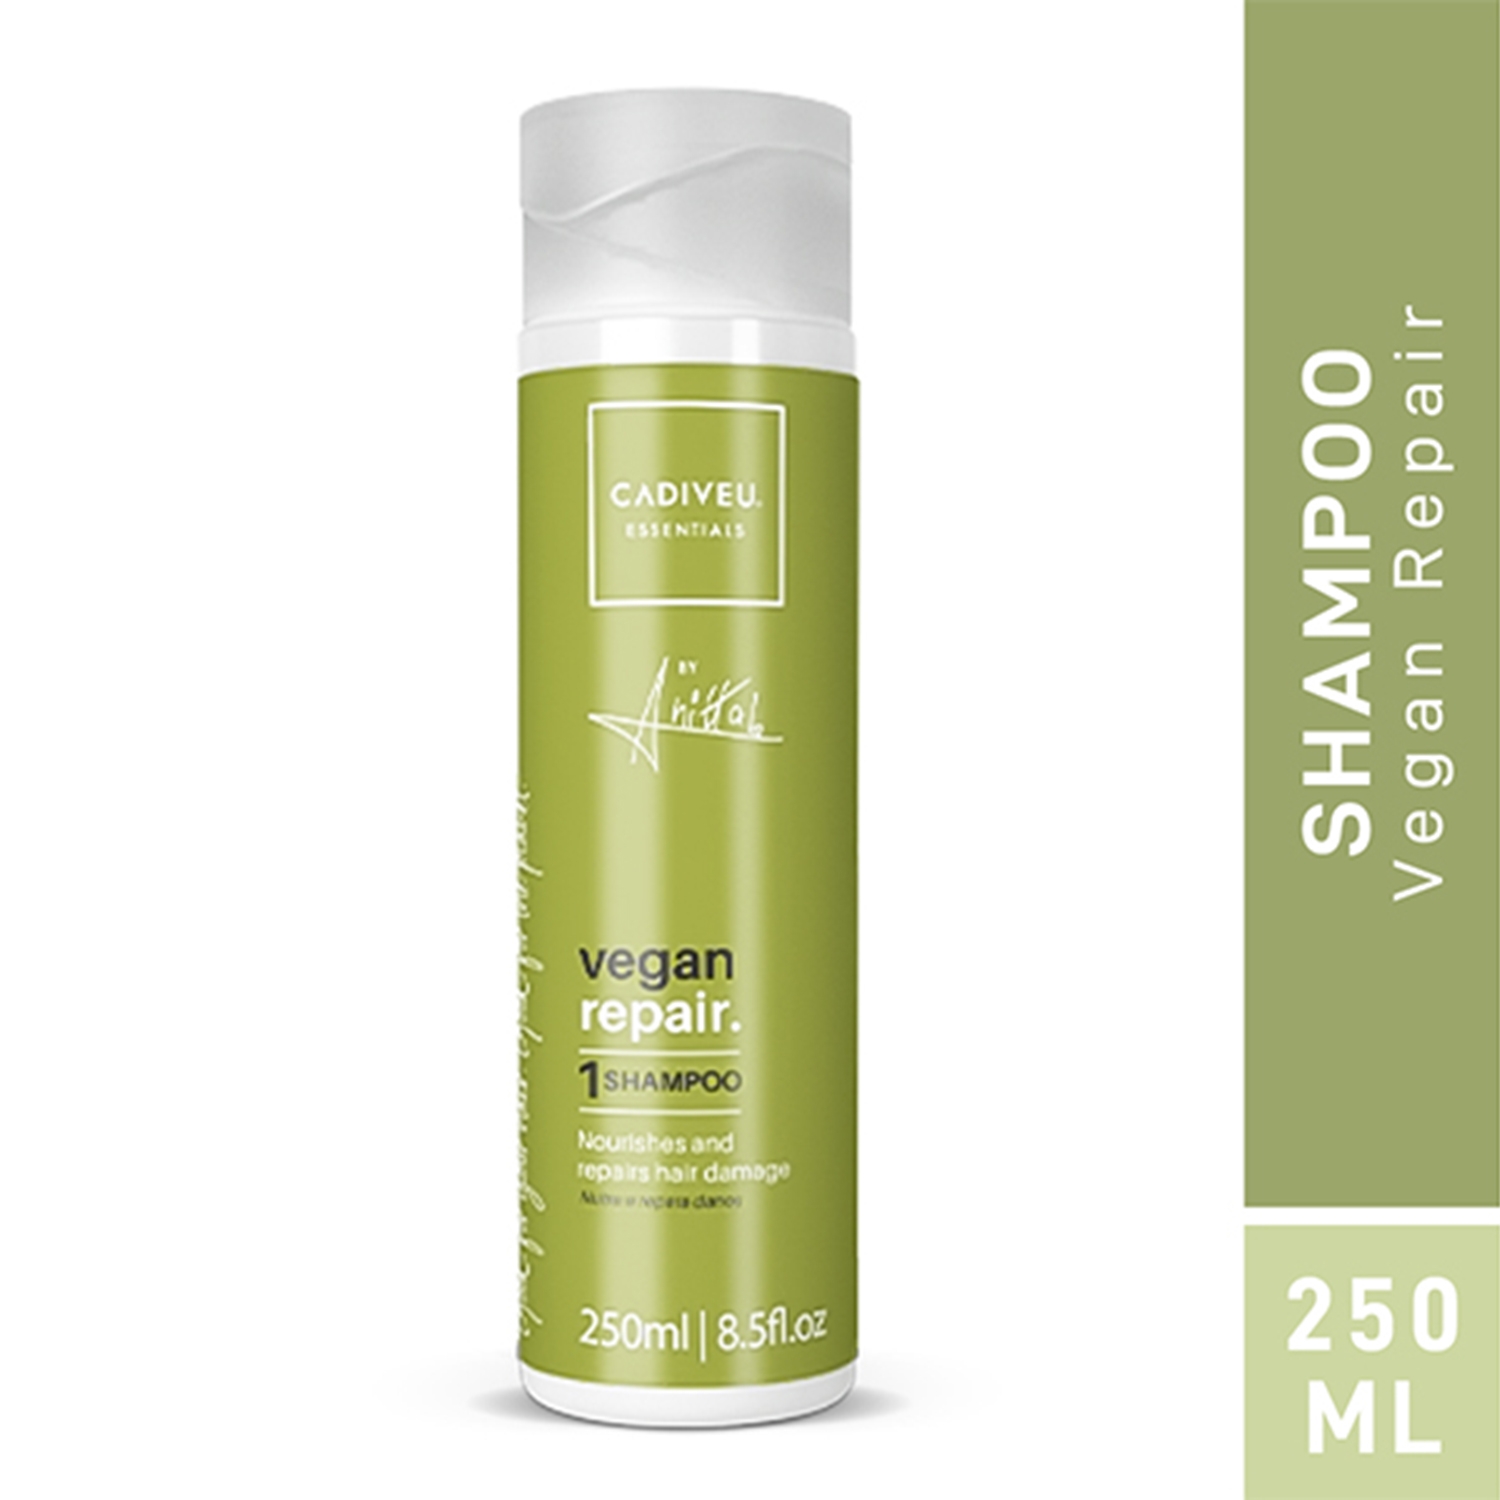 Cadiveu Vegan Repair Shampoo (250ml)